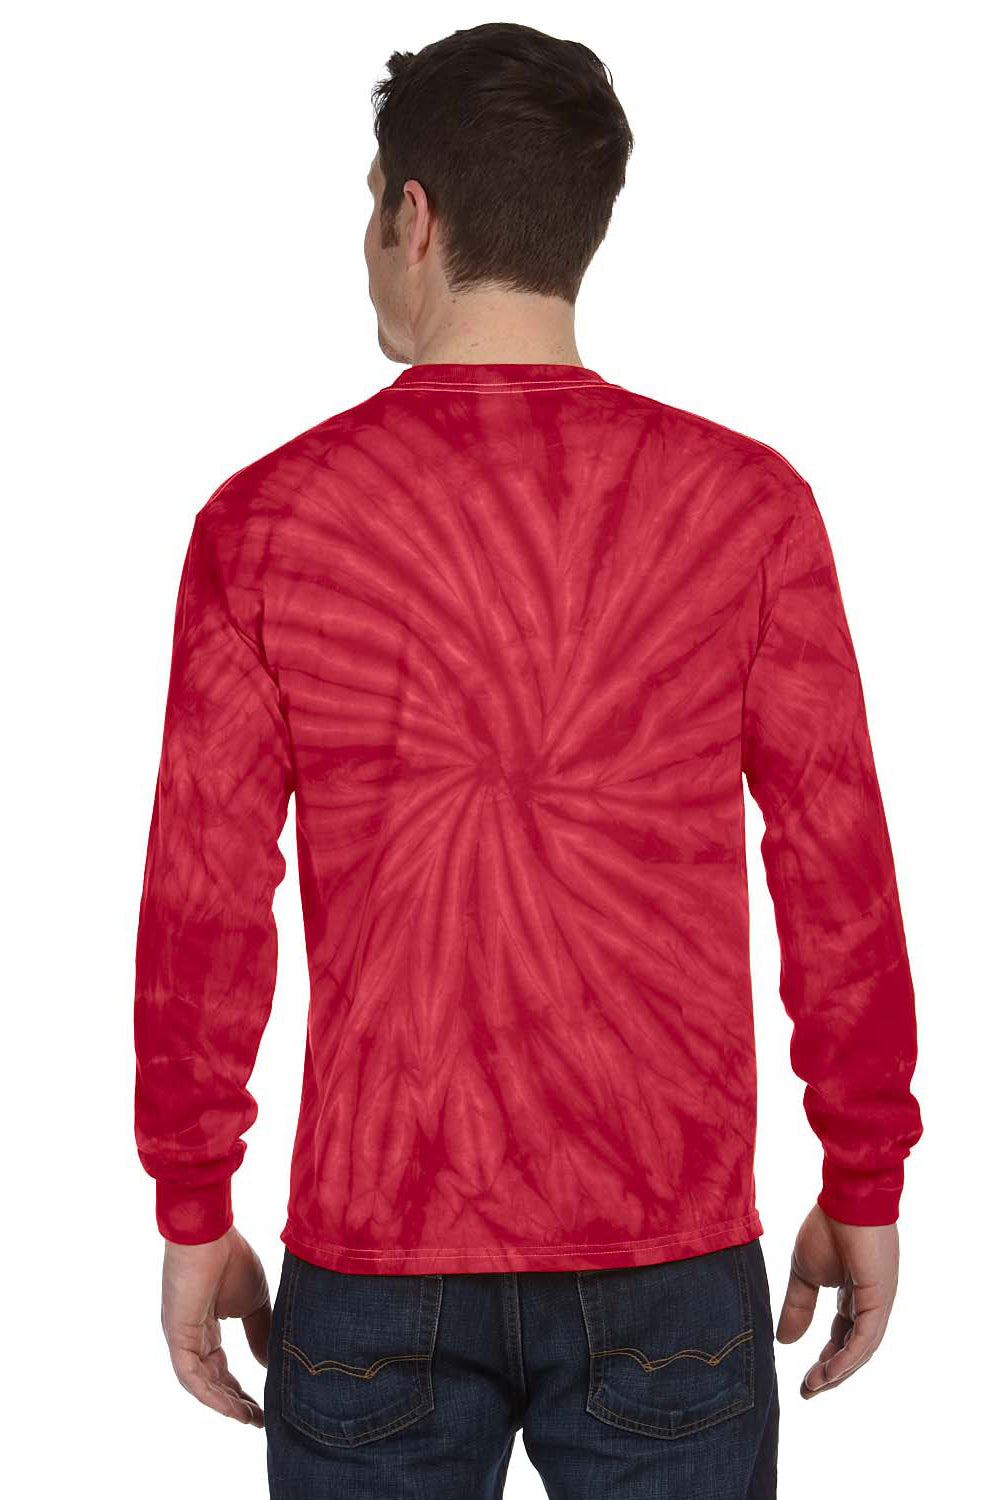 Tie-Dye CD2000 Mens Long Sleeve Crewneck T-Shirt Red Back